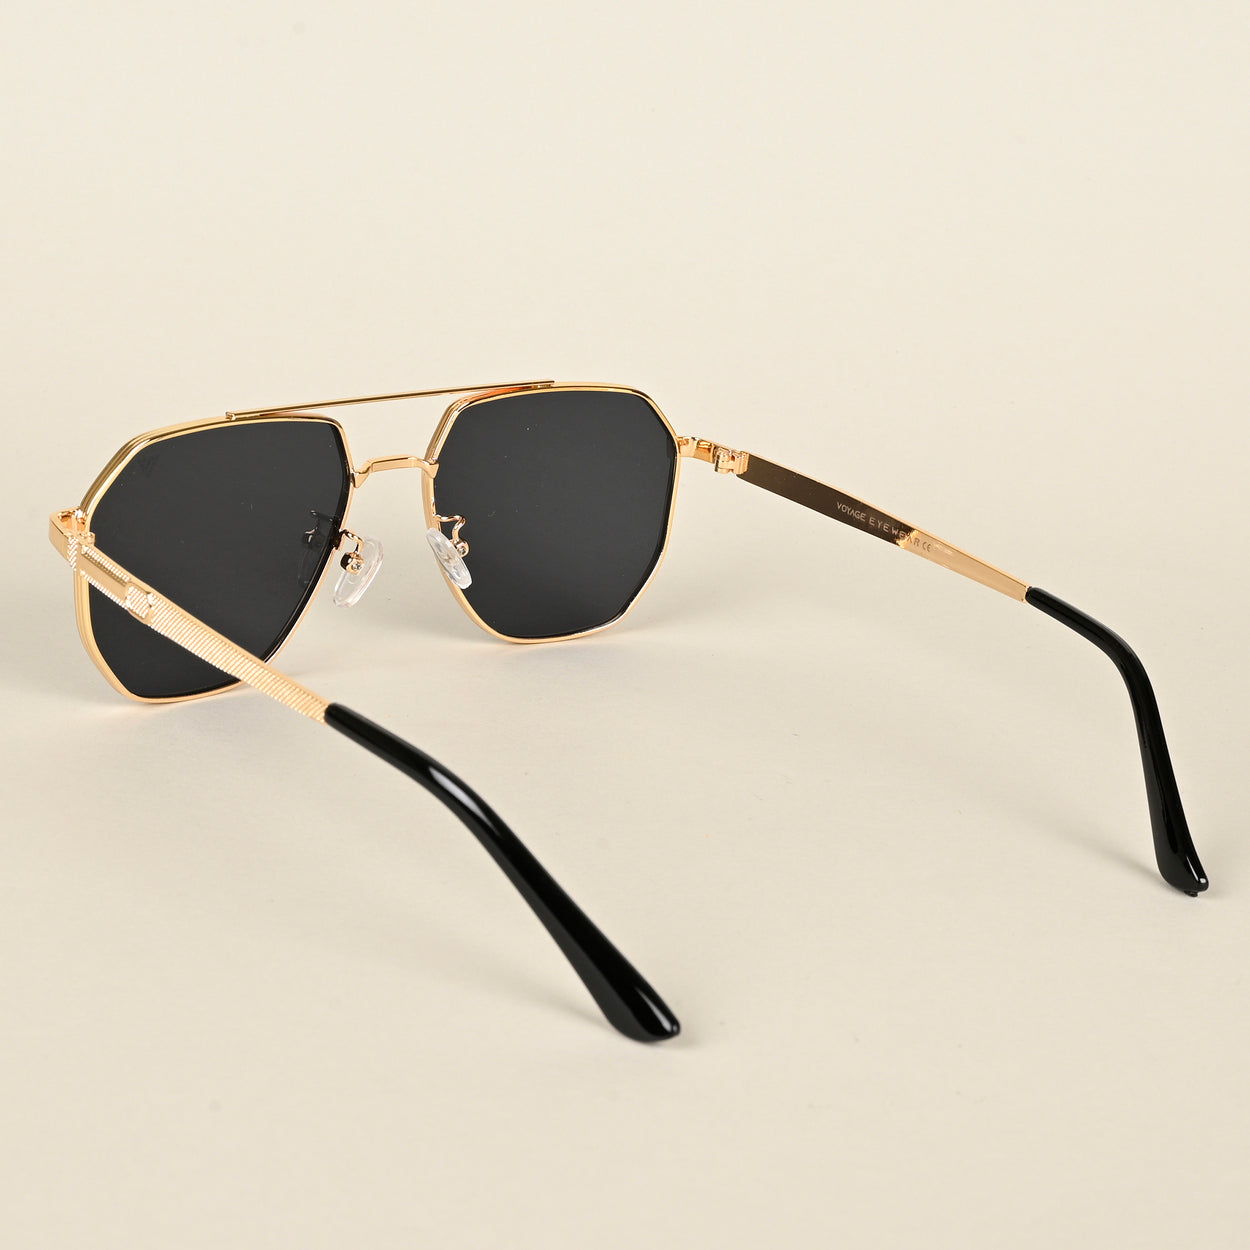 Voyage Black weyfarer Sunglasses for Men & Women (8949MG4323)